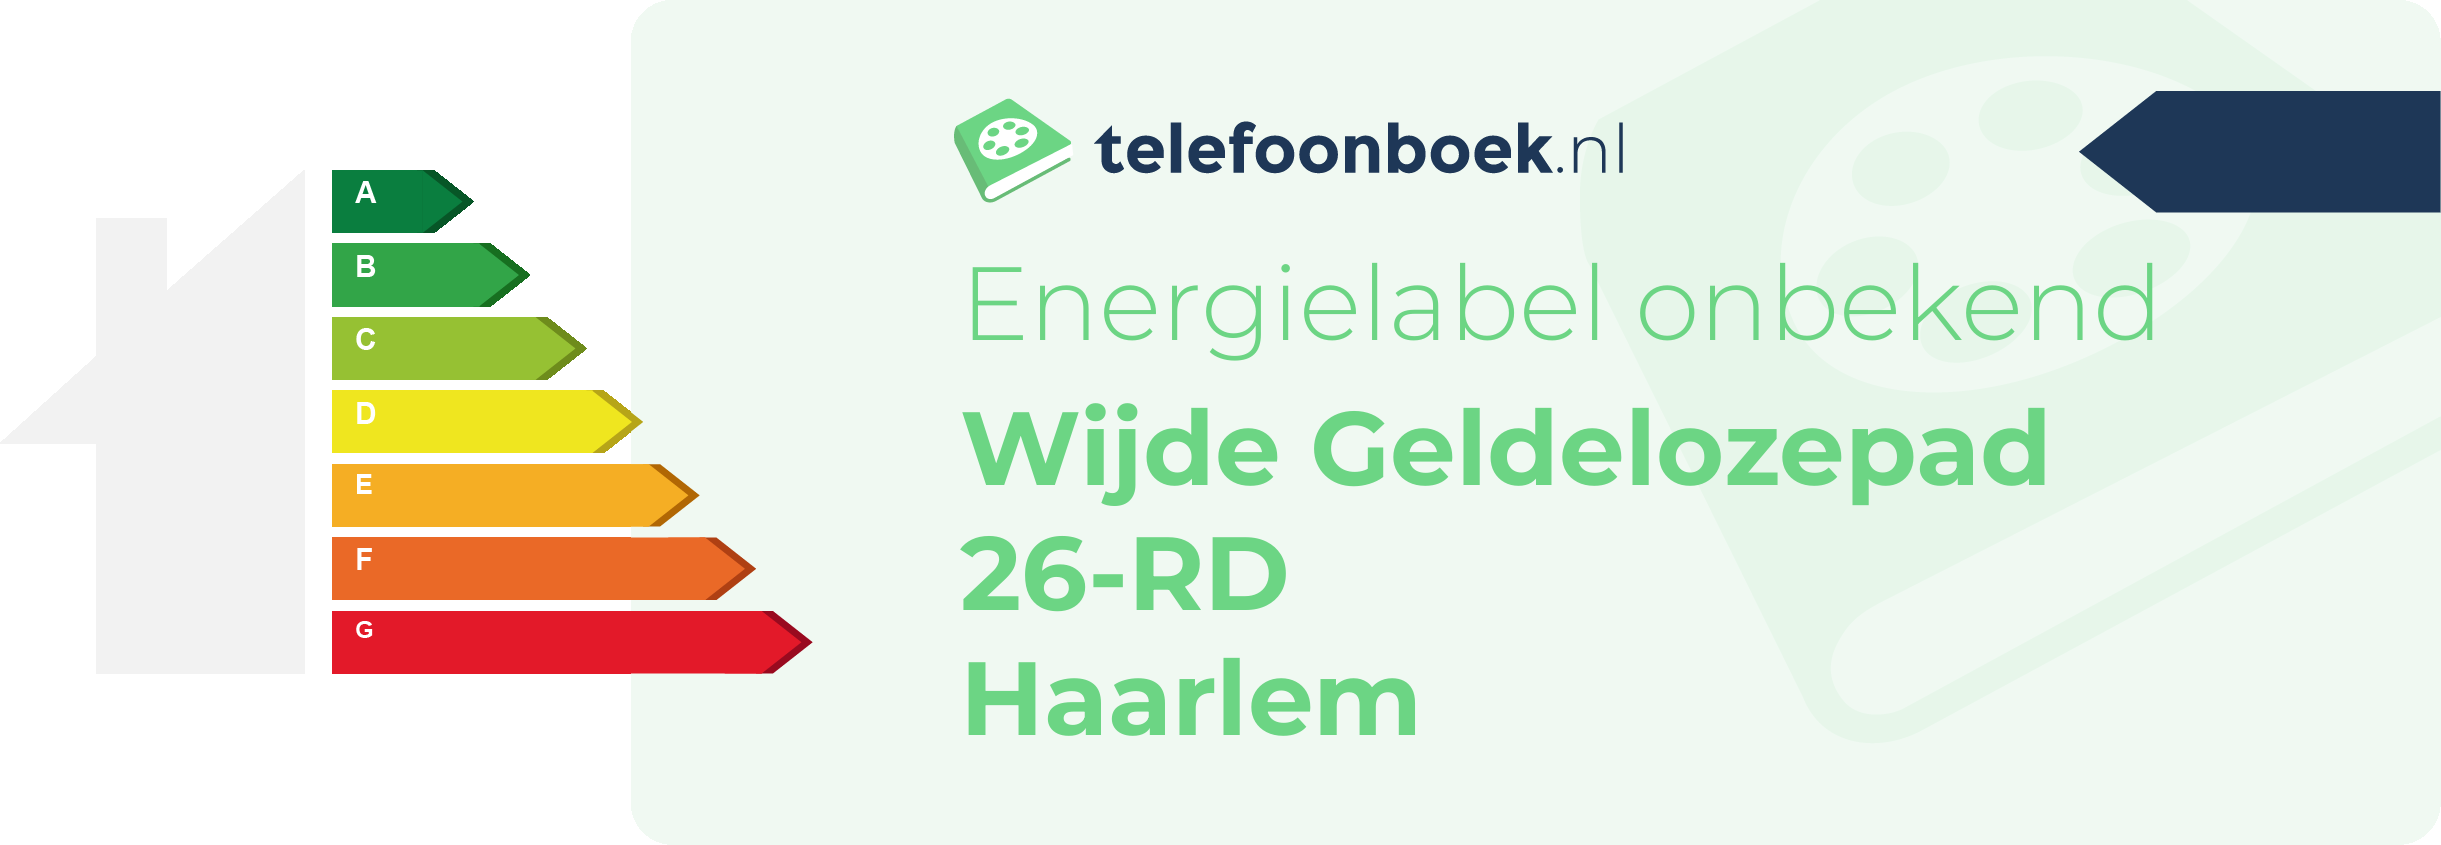 Energielabel Wijde Geldelozepad 26-RD Haarlem